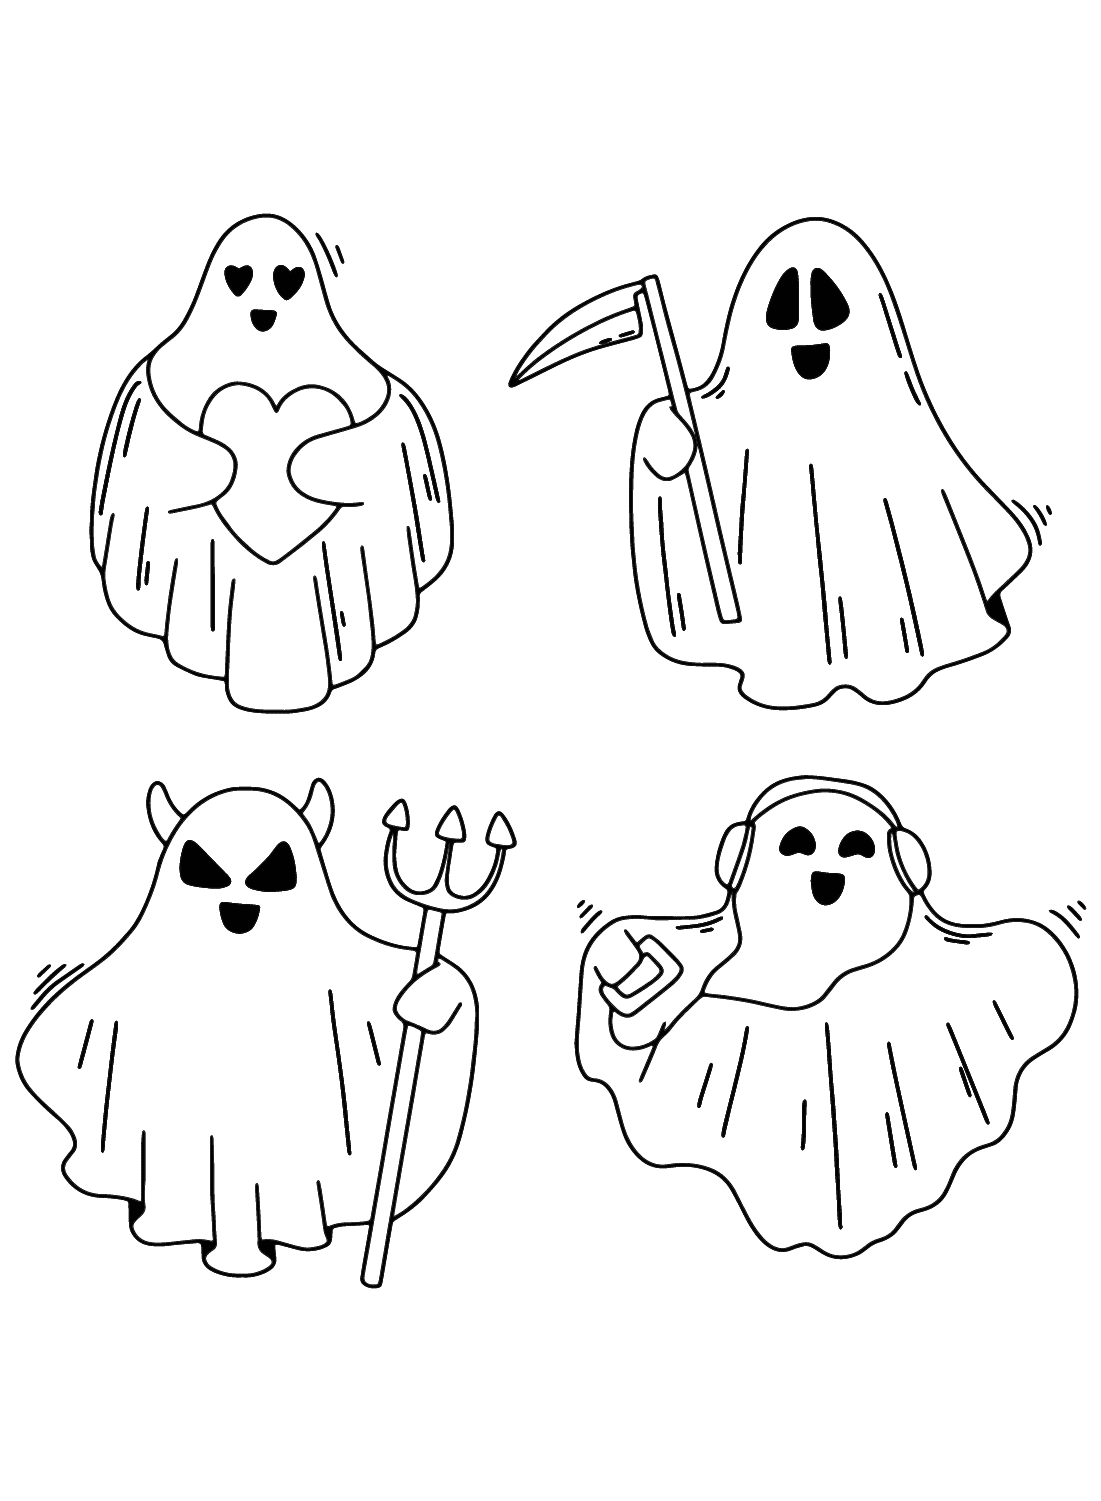 Раскраска Призрак для печати от Ghost